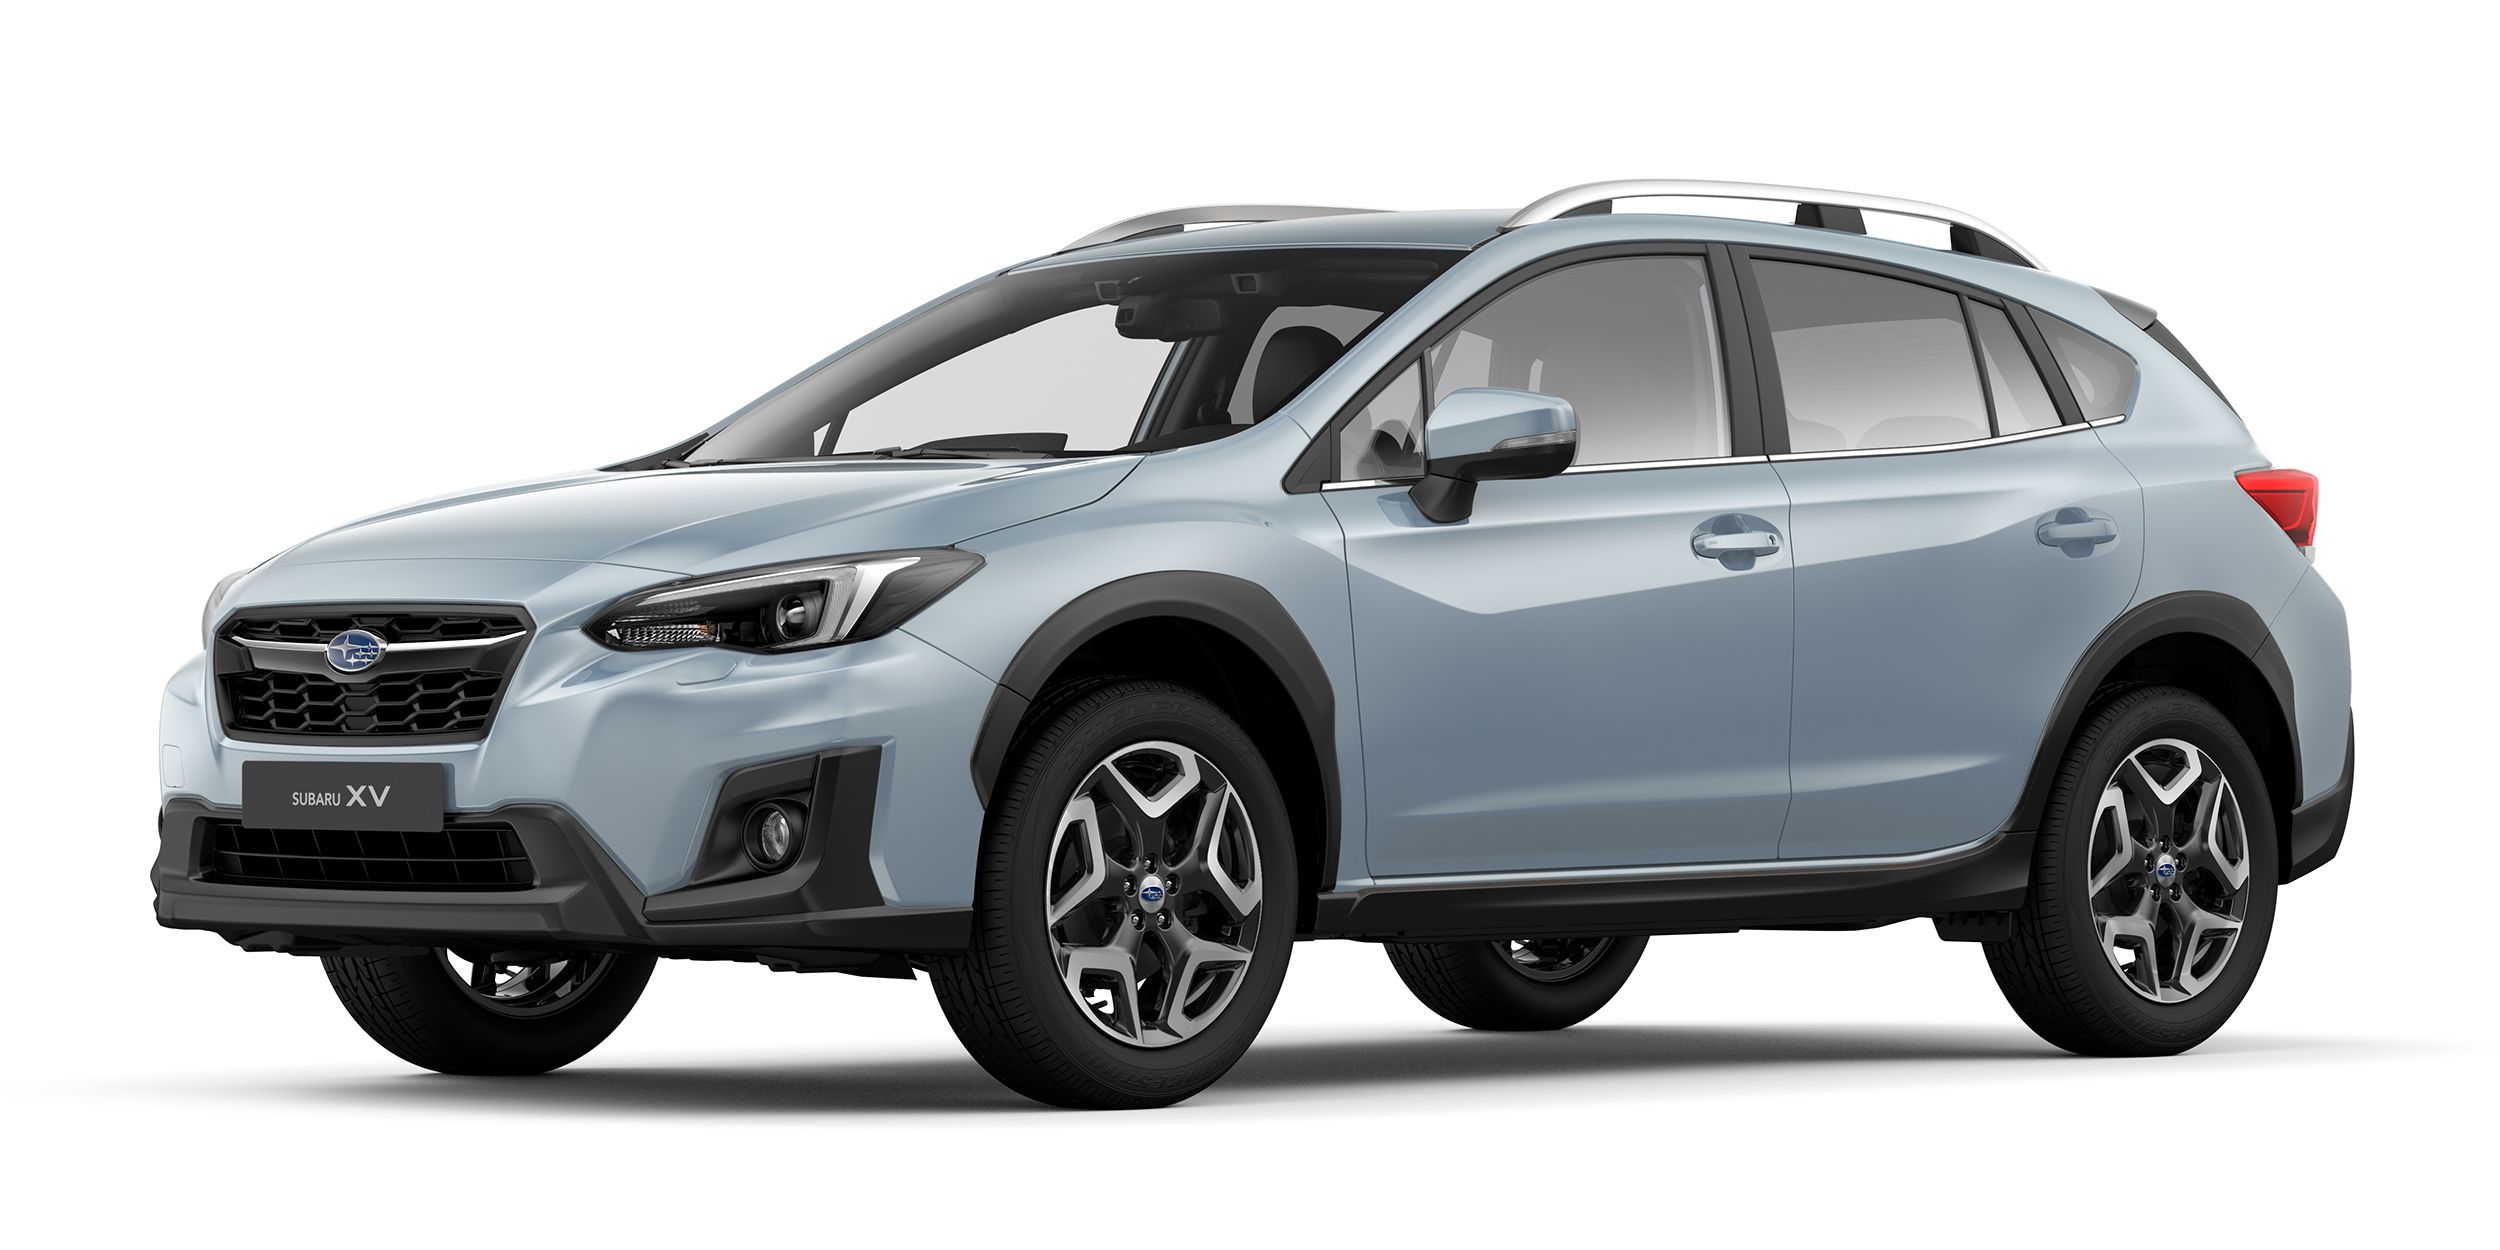 2017 Subaru XV review - Drive